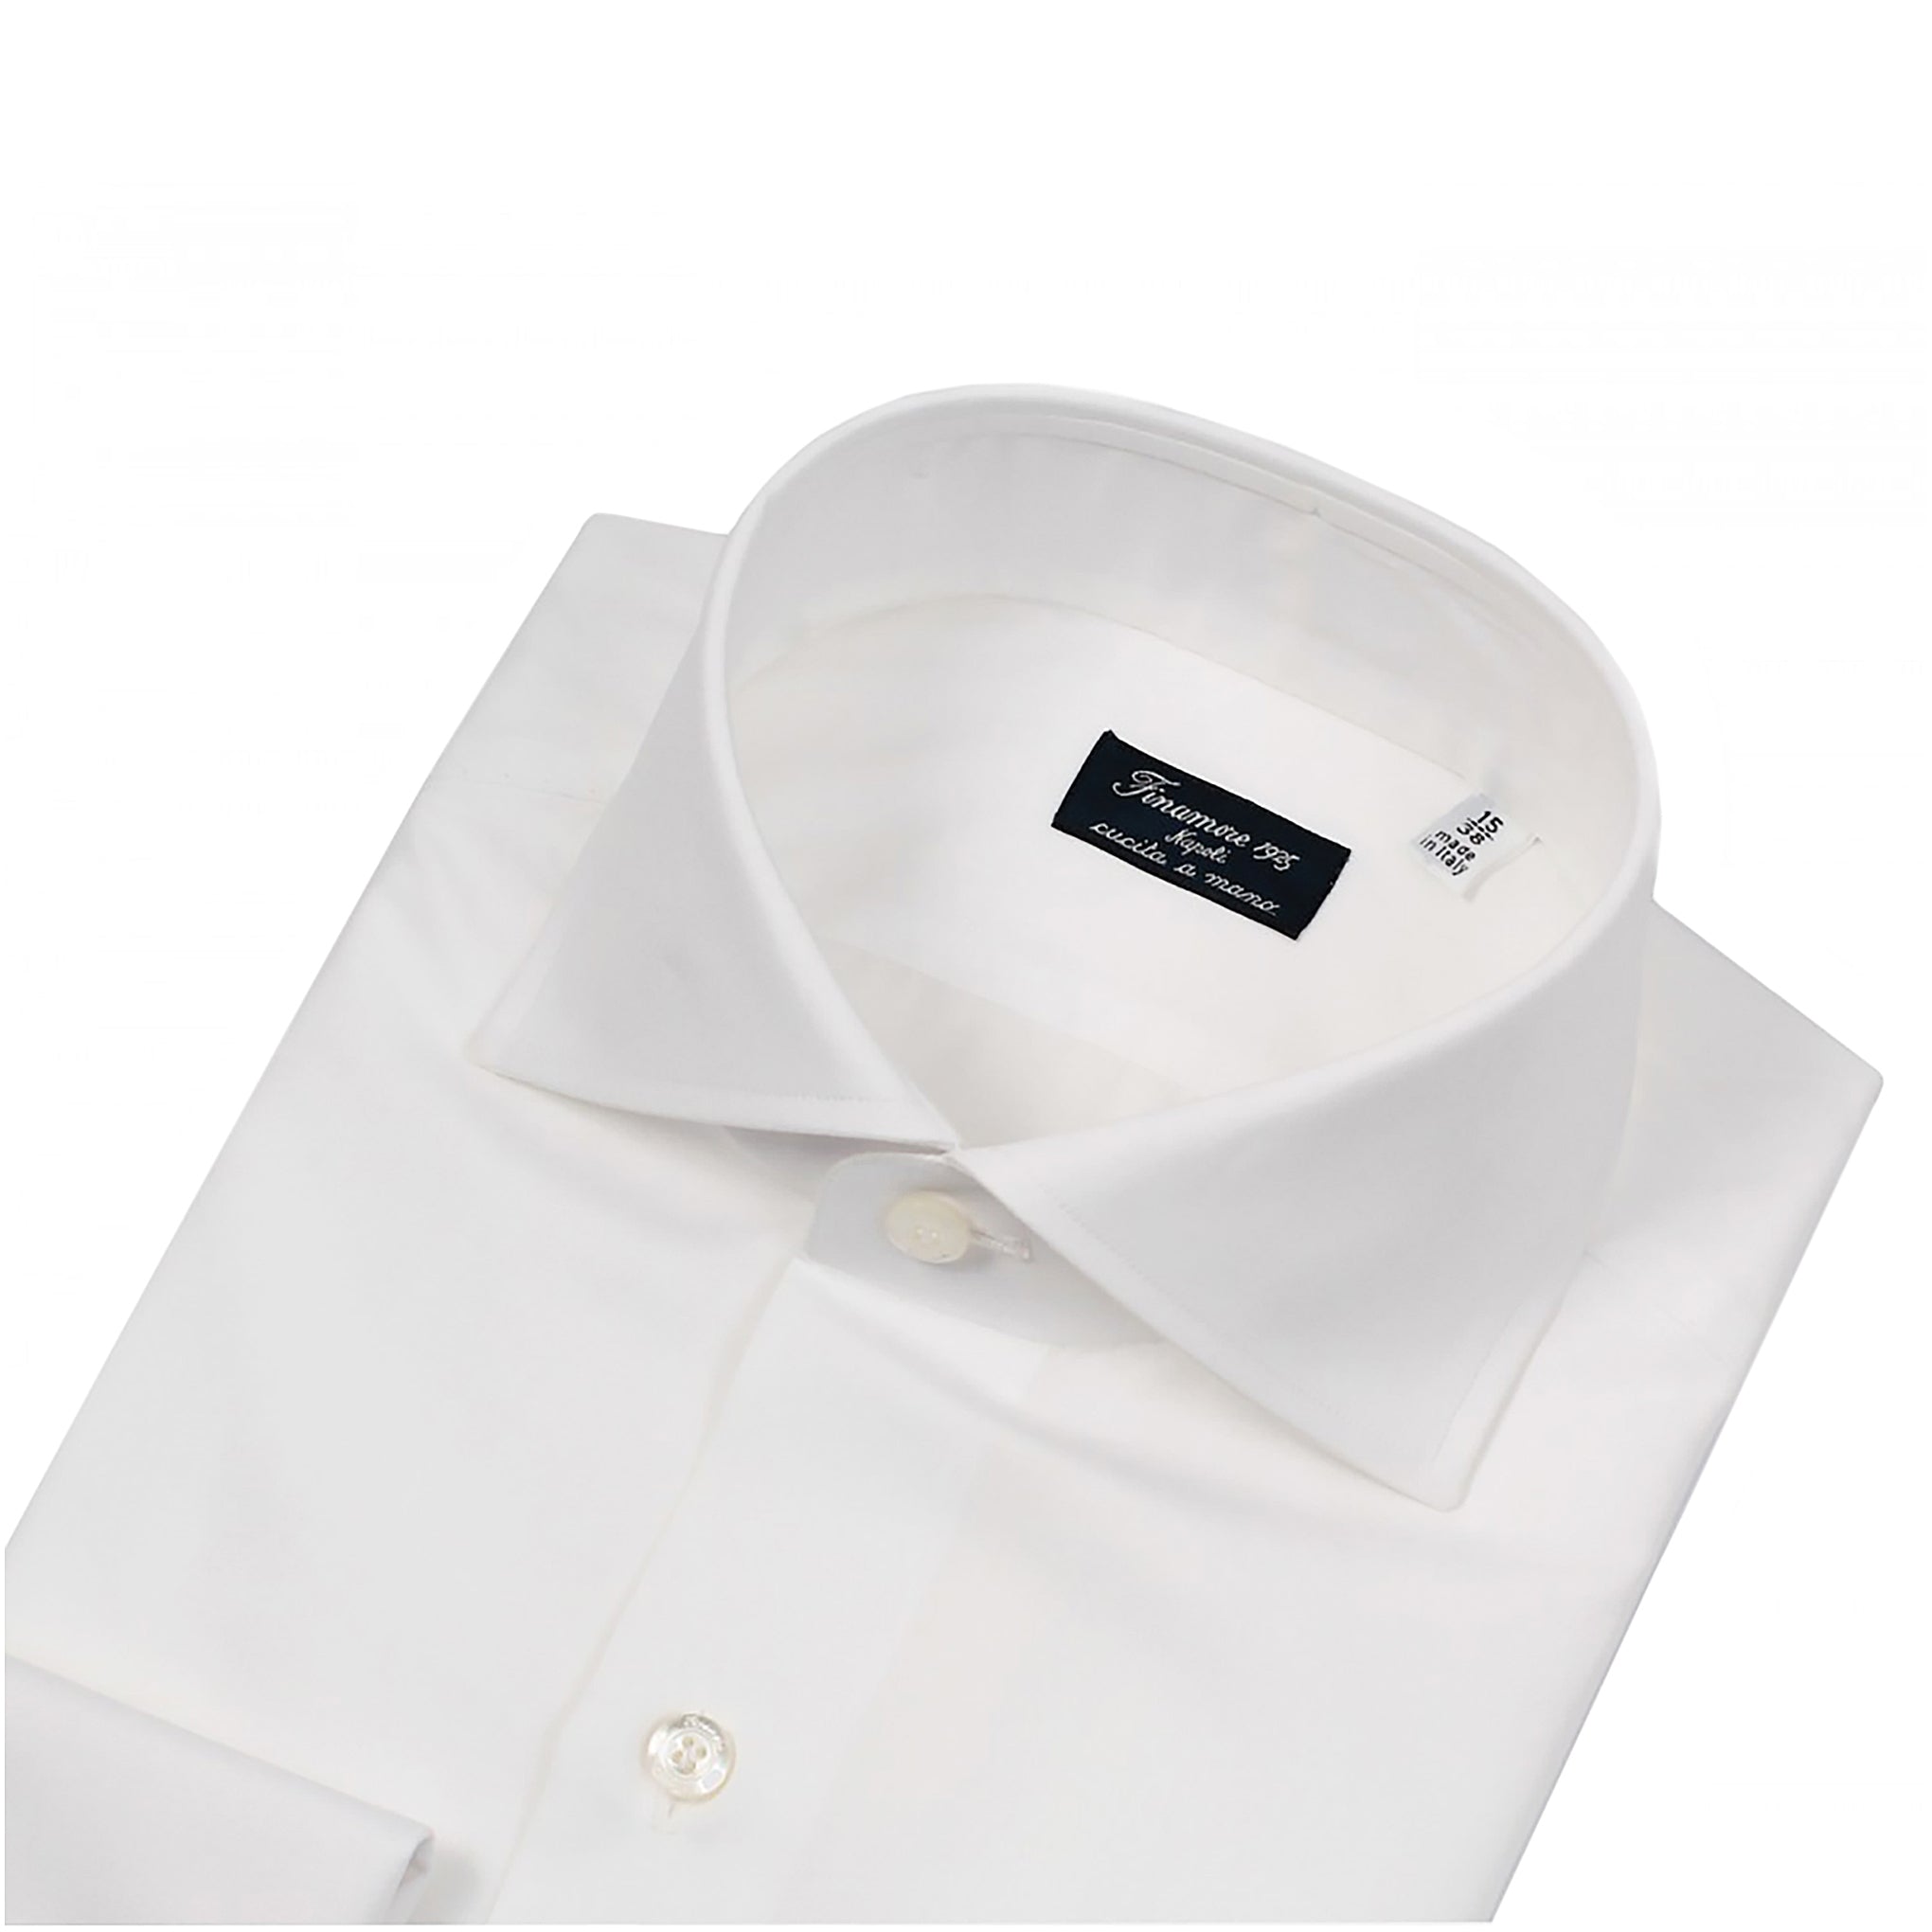 Napoli classic white Popeline shirt with cufflink cuff